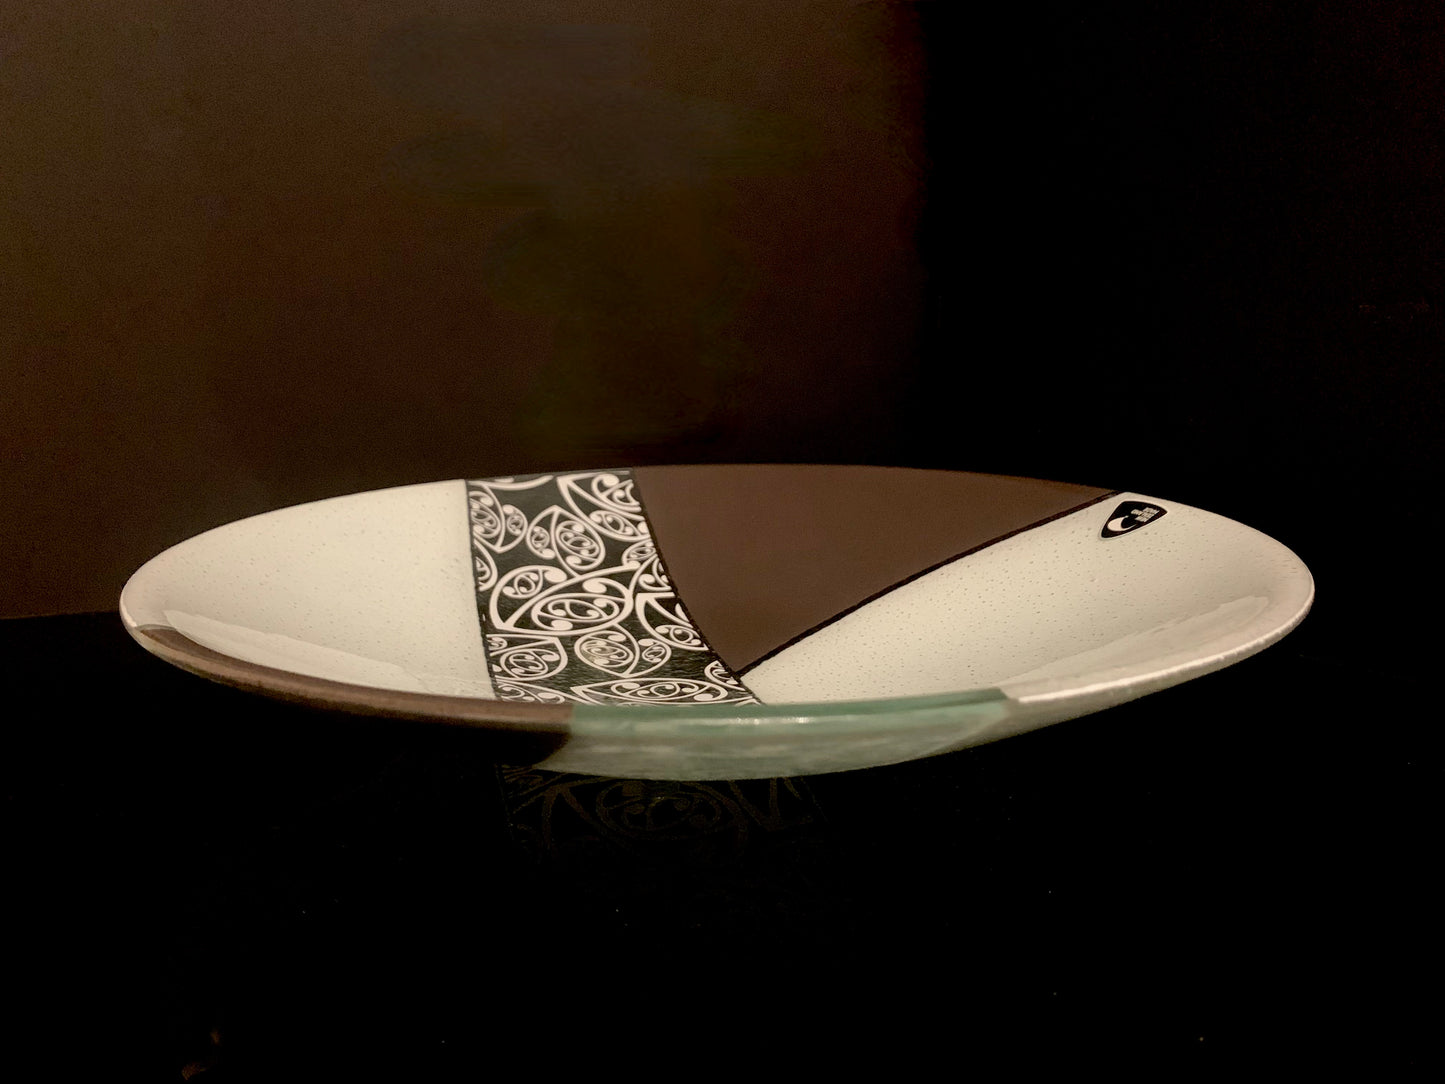 Fused Glass Bowl by Maori Boy - Kowhaiwhai Design (brown and white) 32cm